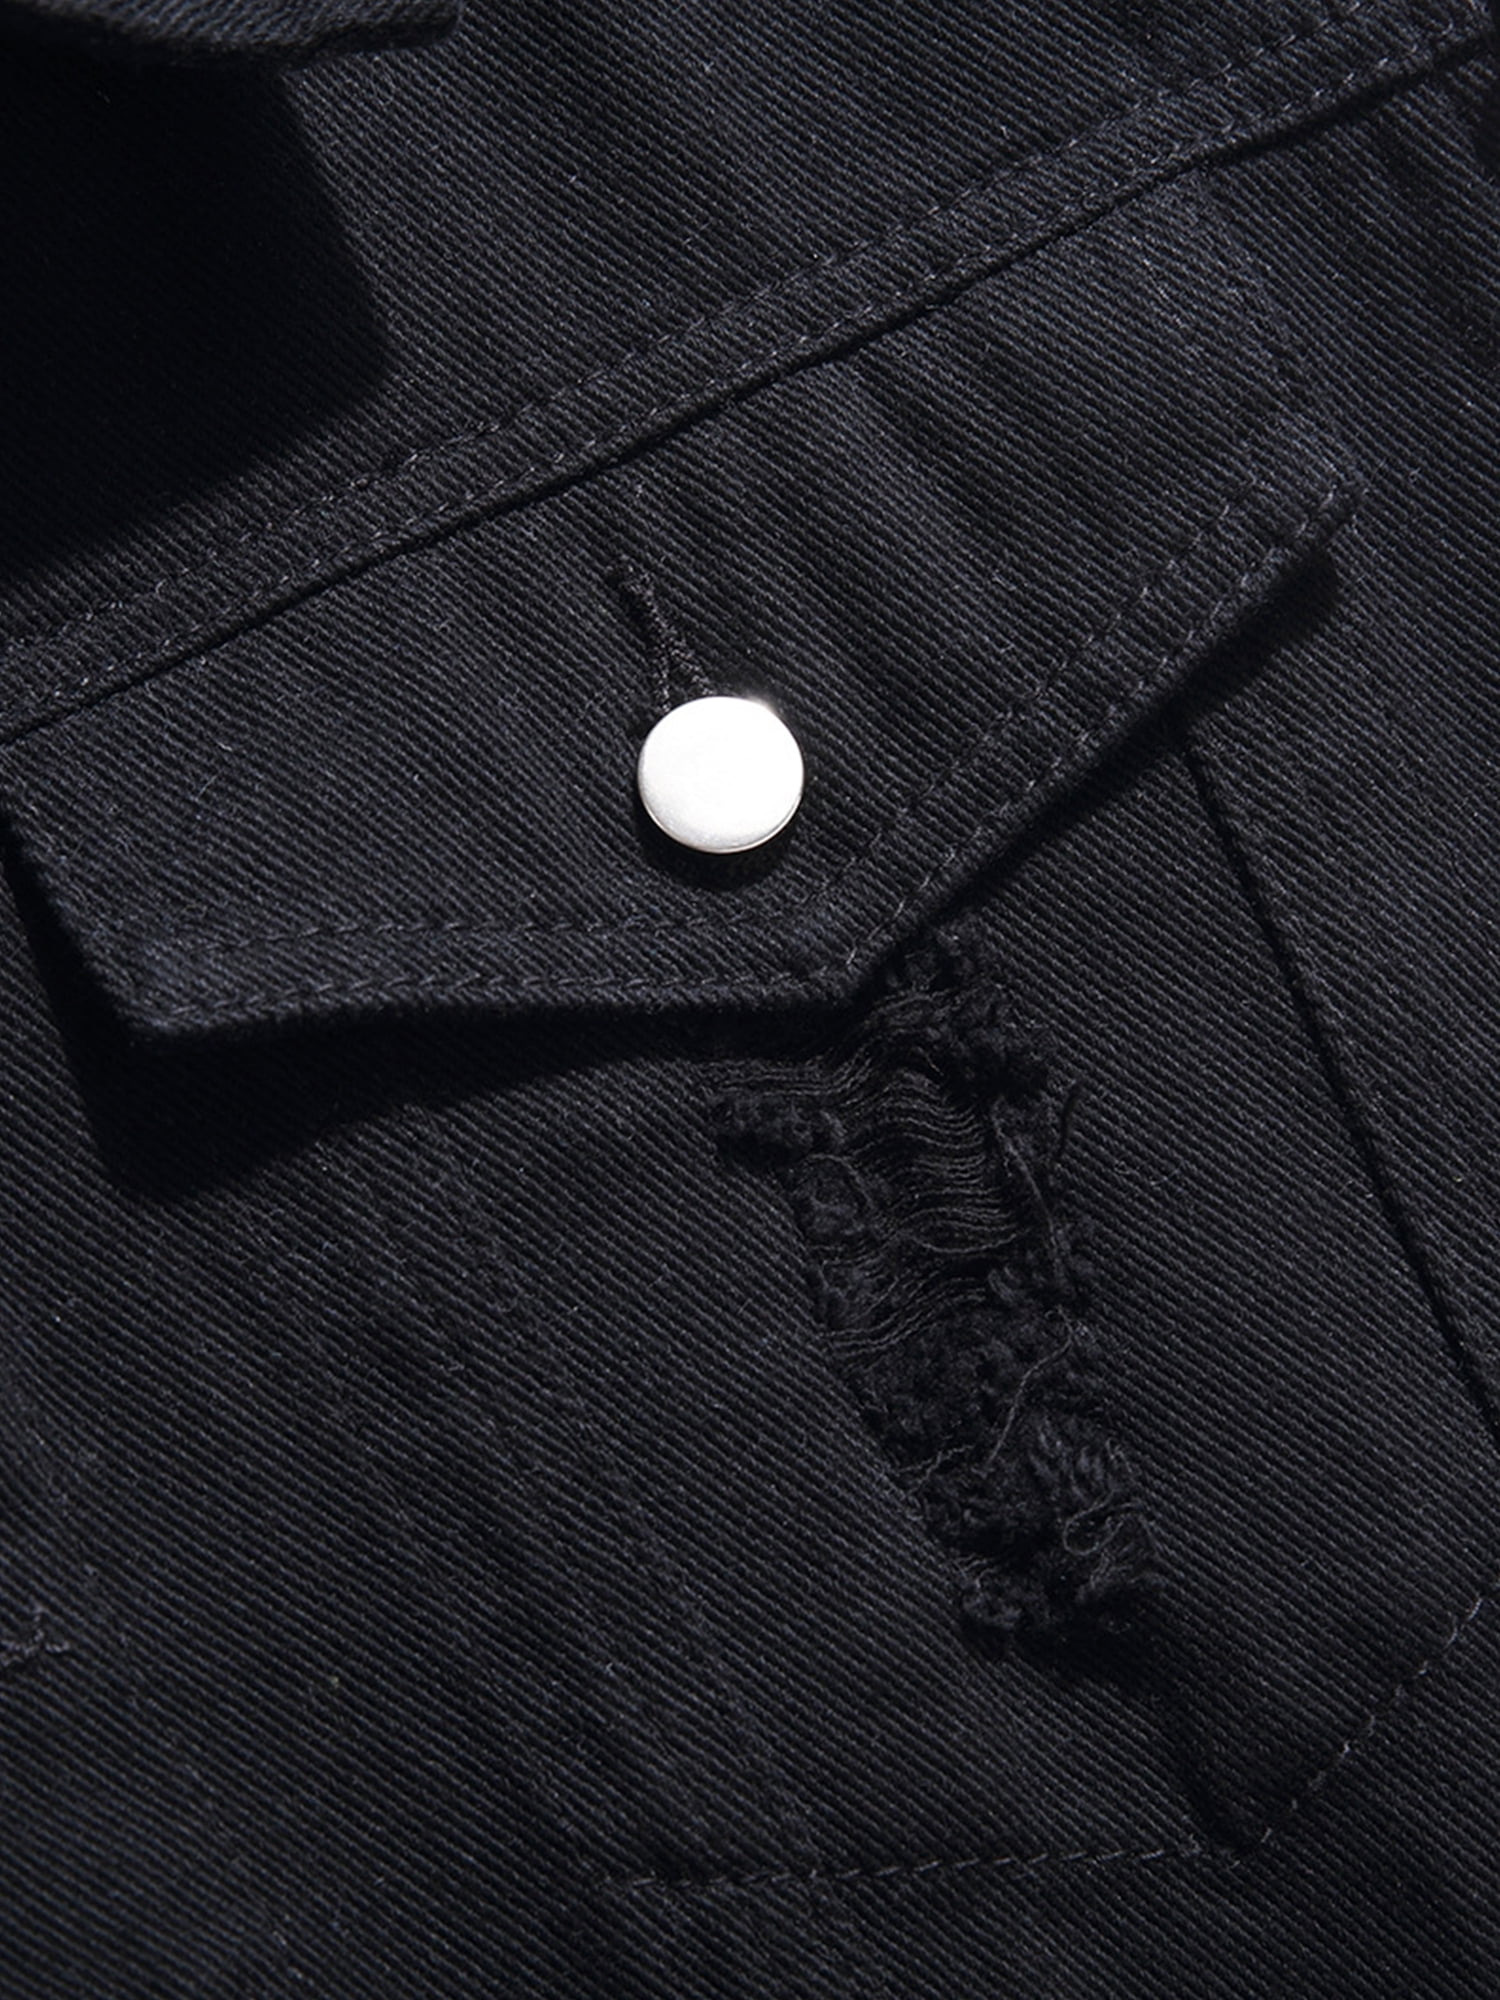 Men's waistcoat-Textured waistcoat with a slim fit - slim cut textured  waistcoat for men| WAM DENIM